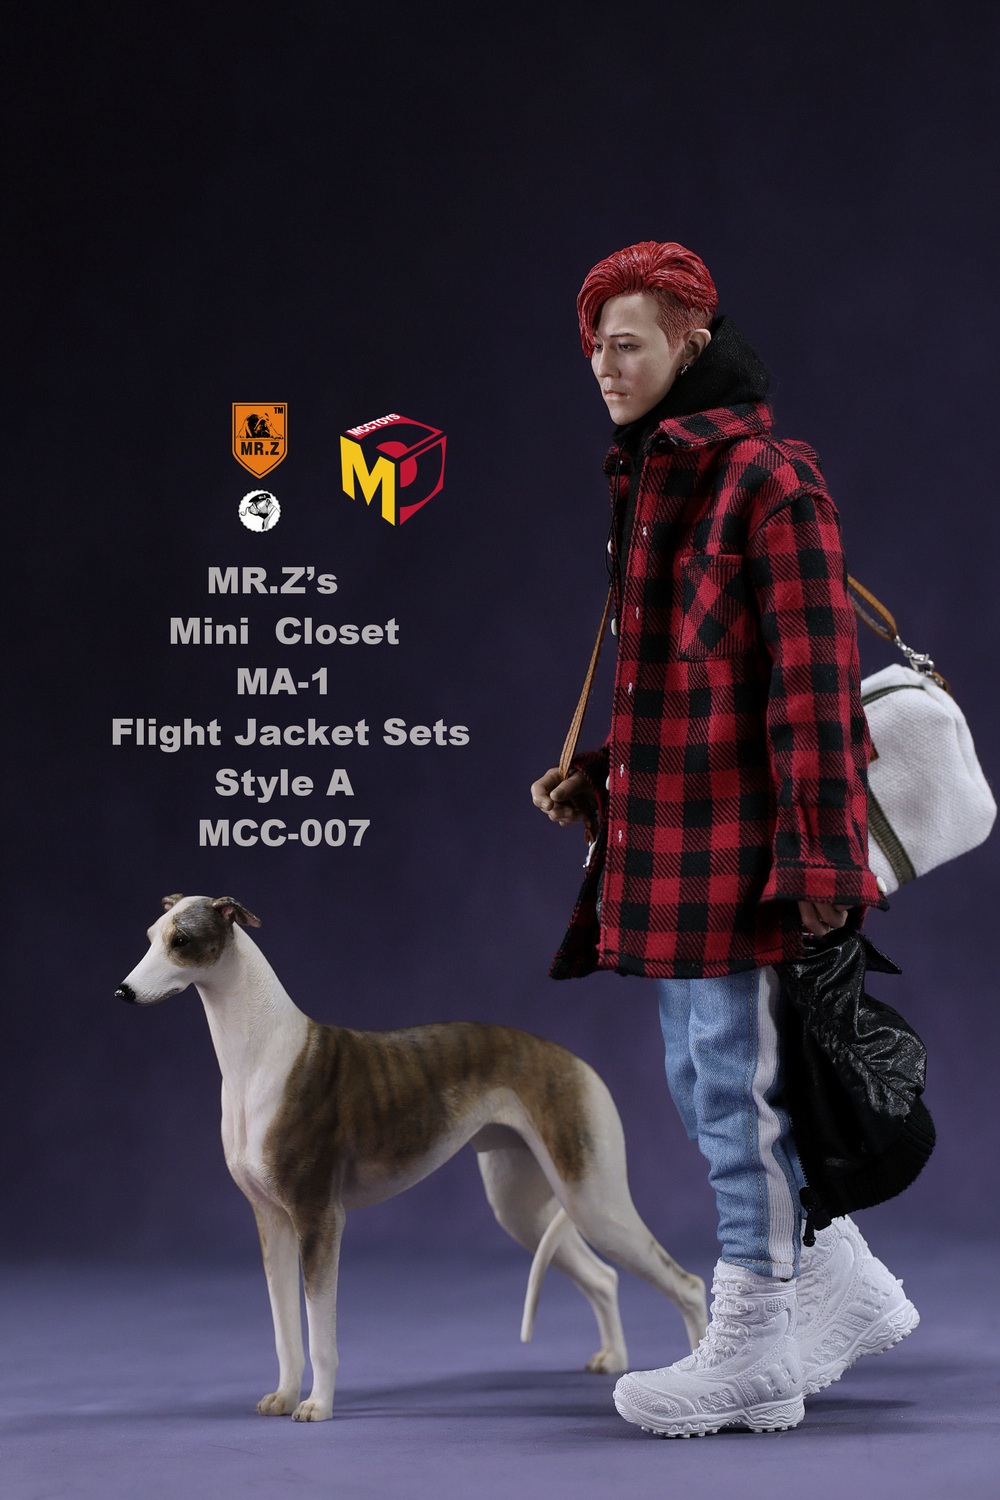 female - NEW PRODUCT: MCCToys x Mr. Z 1/6 MR.Z's Mini Closet - Flight Jacket sets 723